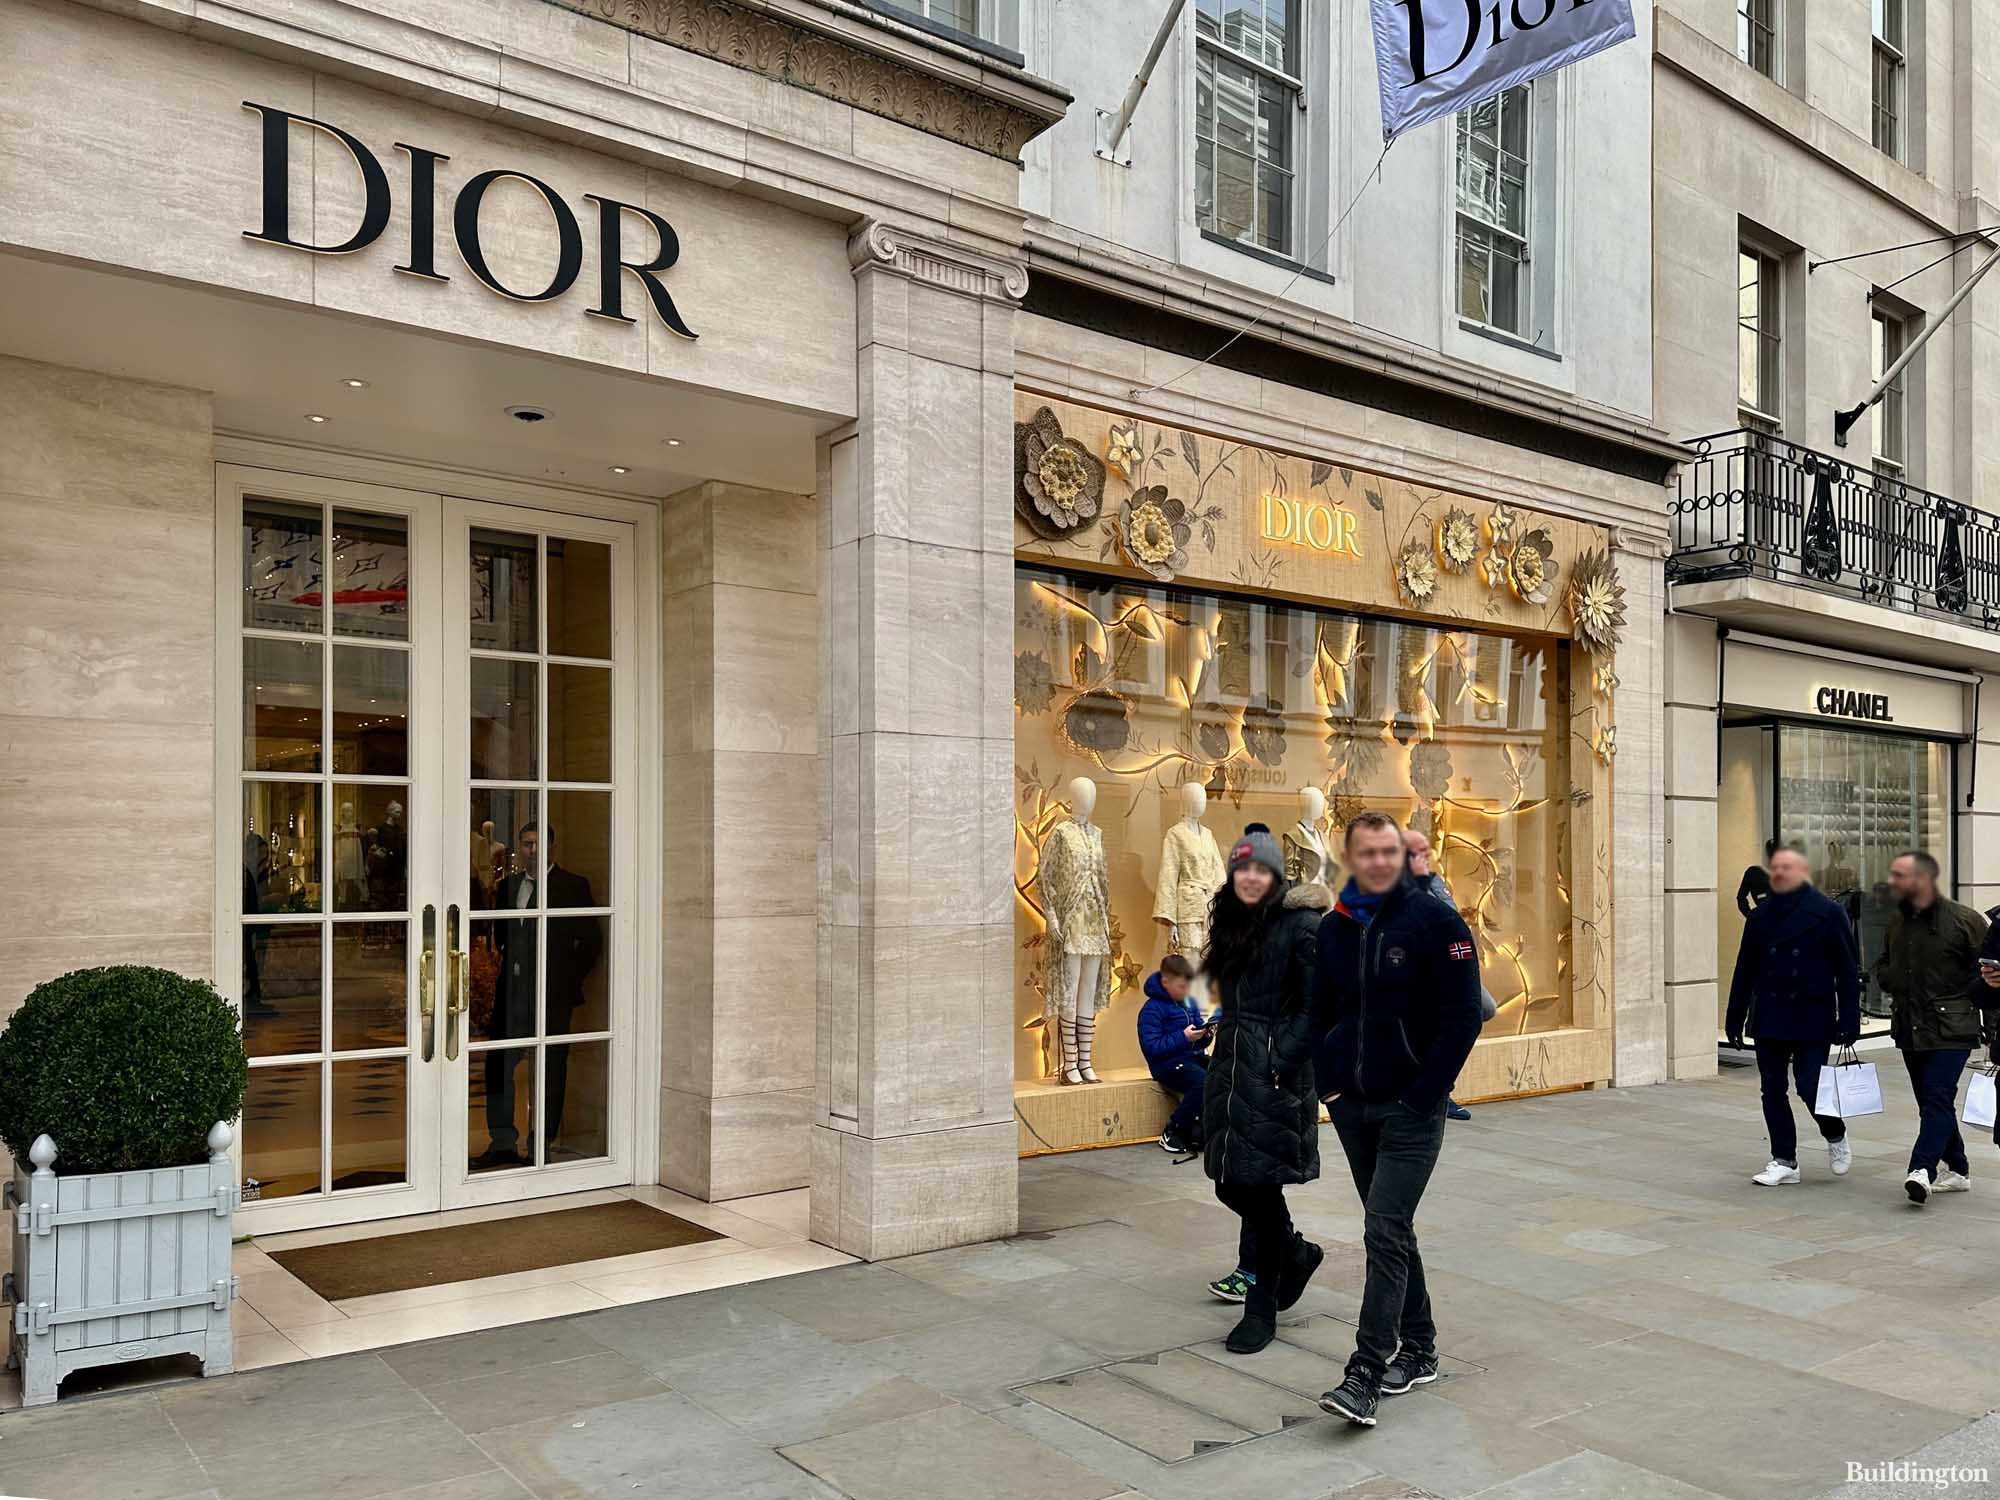 Dior shop at 160-162 New Bond Street in Mayfair, London W1.